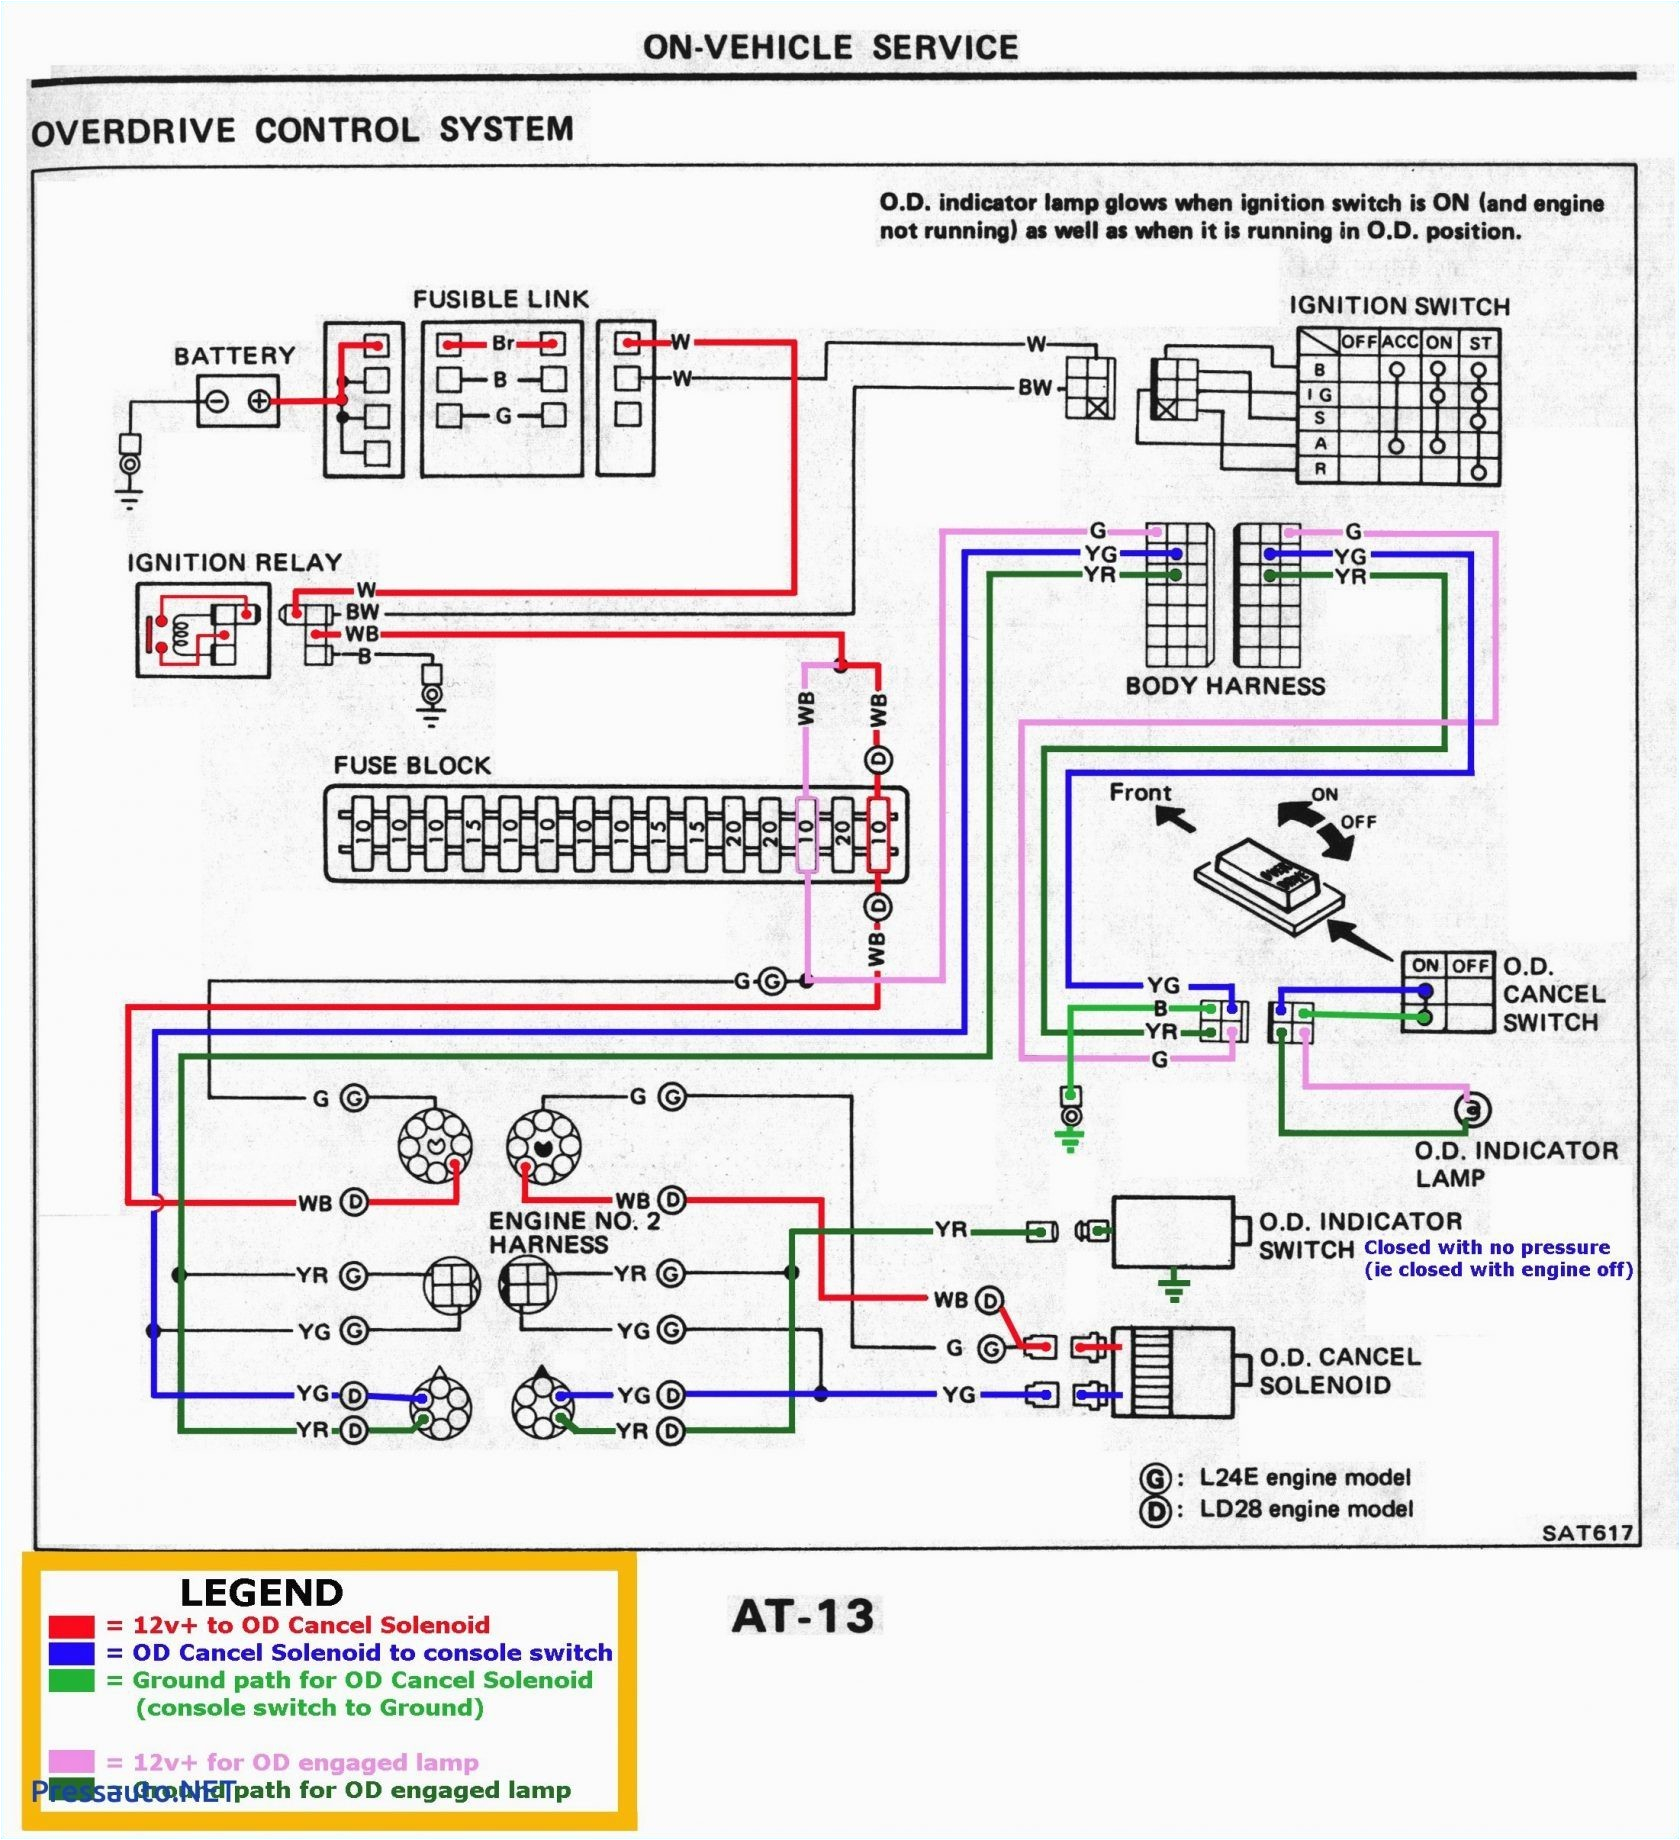 2001 Dodge Grand Caravan Radio Wiring Diagram 2001 Dodge Ram Radio Wiring Diagram Wiring Diagram toolbox